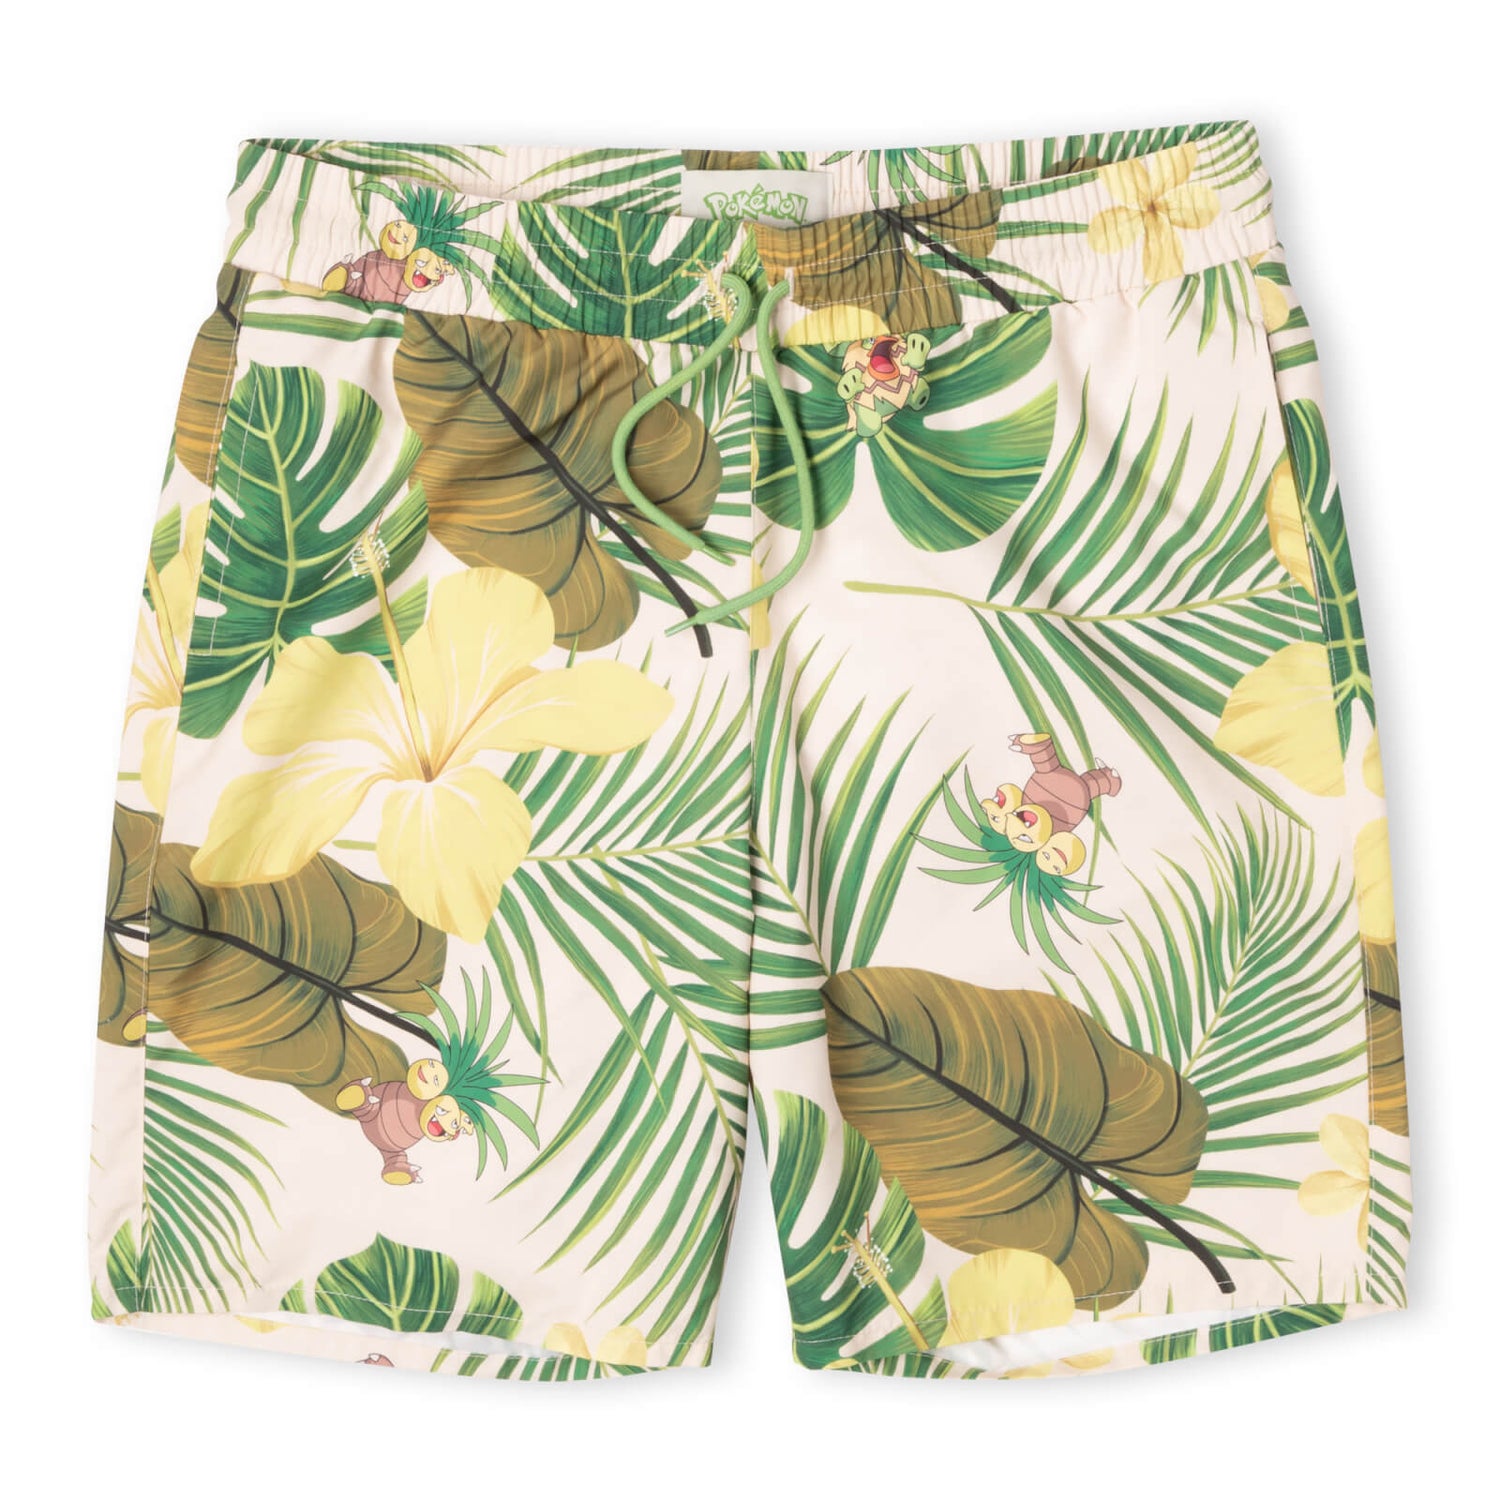 Pokémon Exeggutor Tropical Swim Shorts - Cream